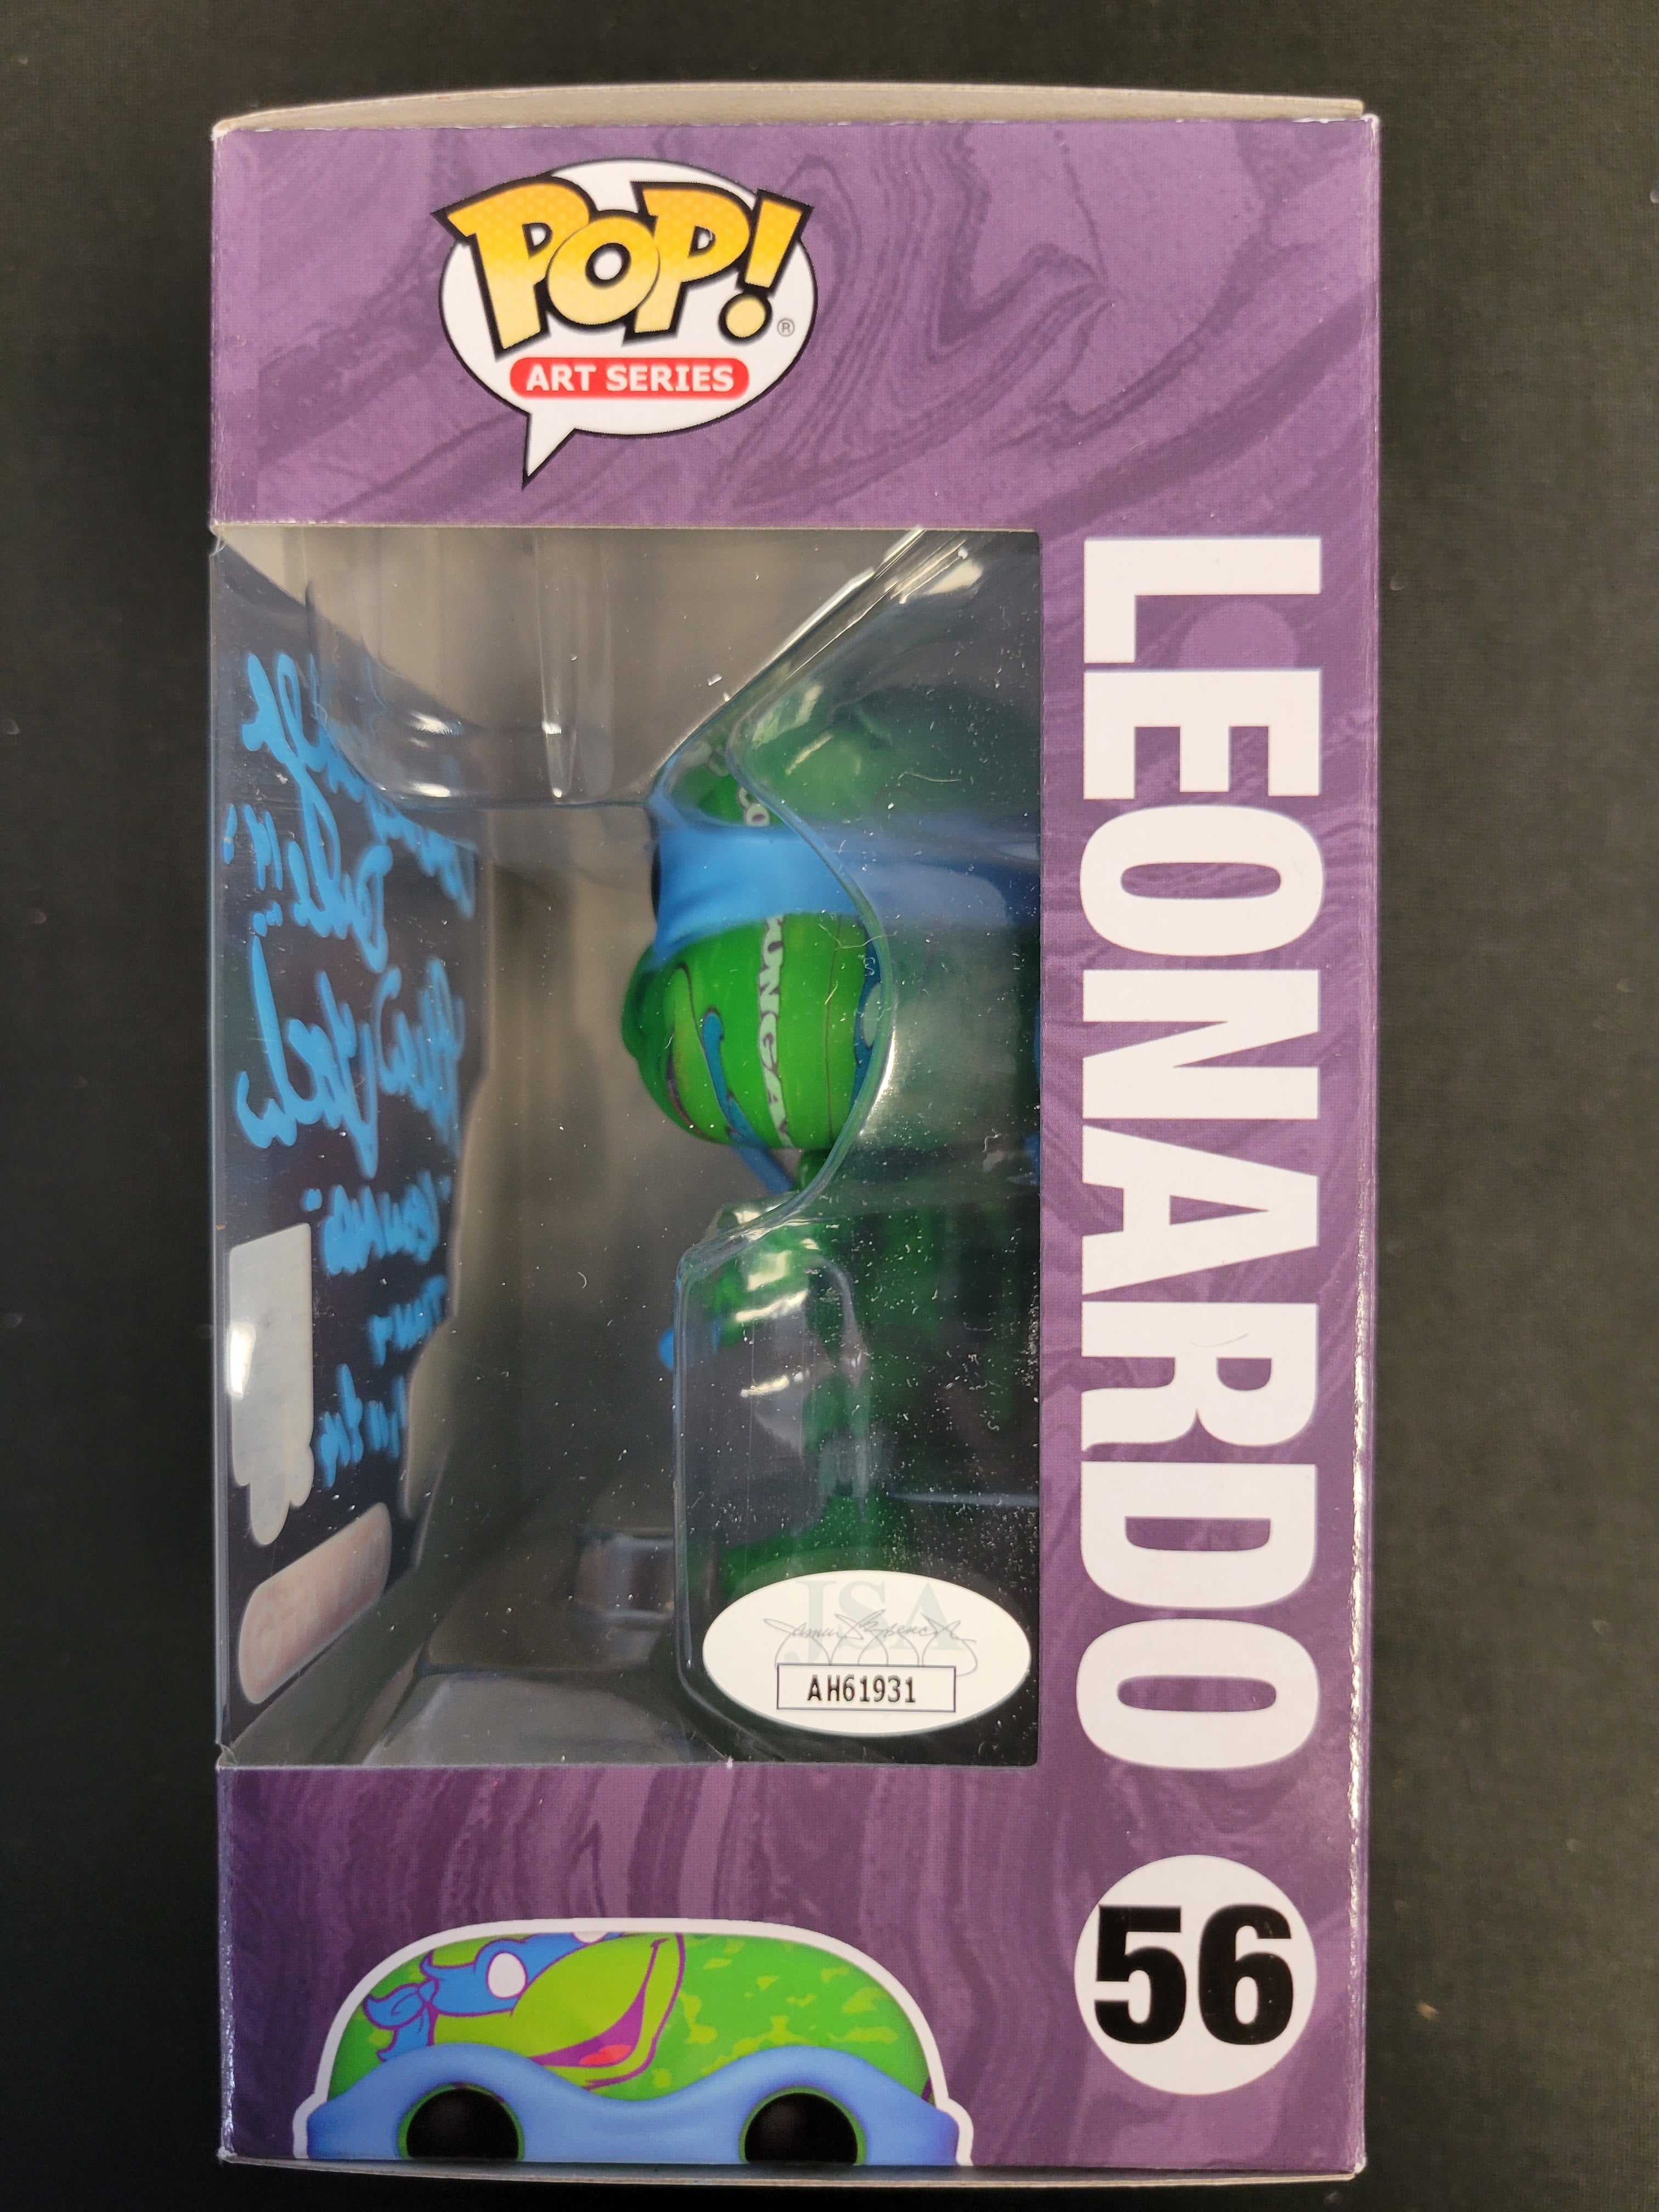 Funko Pop! TMNT Art Series Target Exc: Leonardo Autographed By Brian Tochi 931